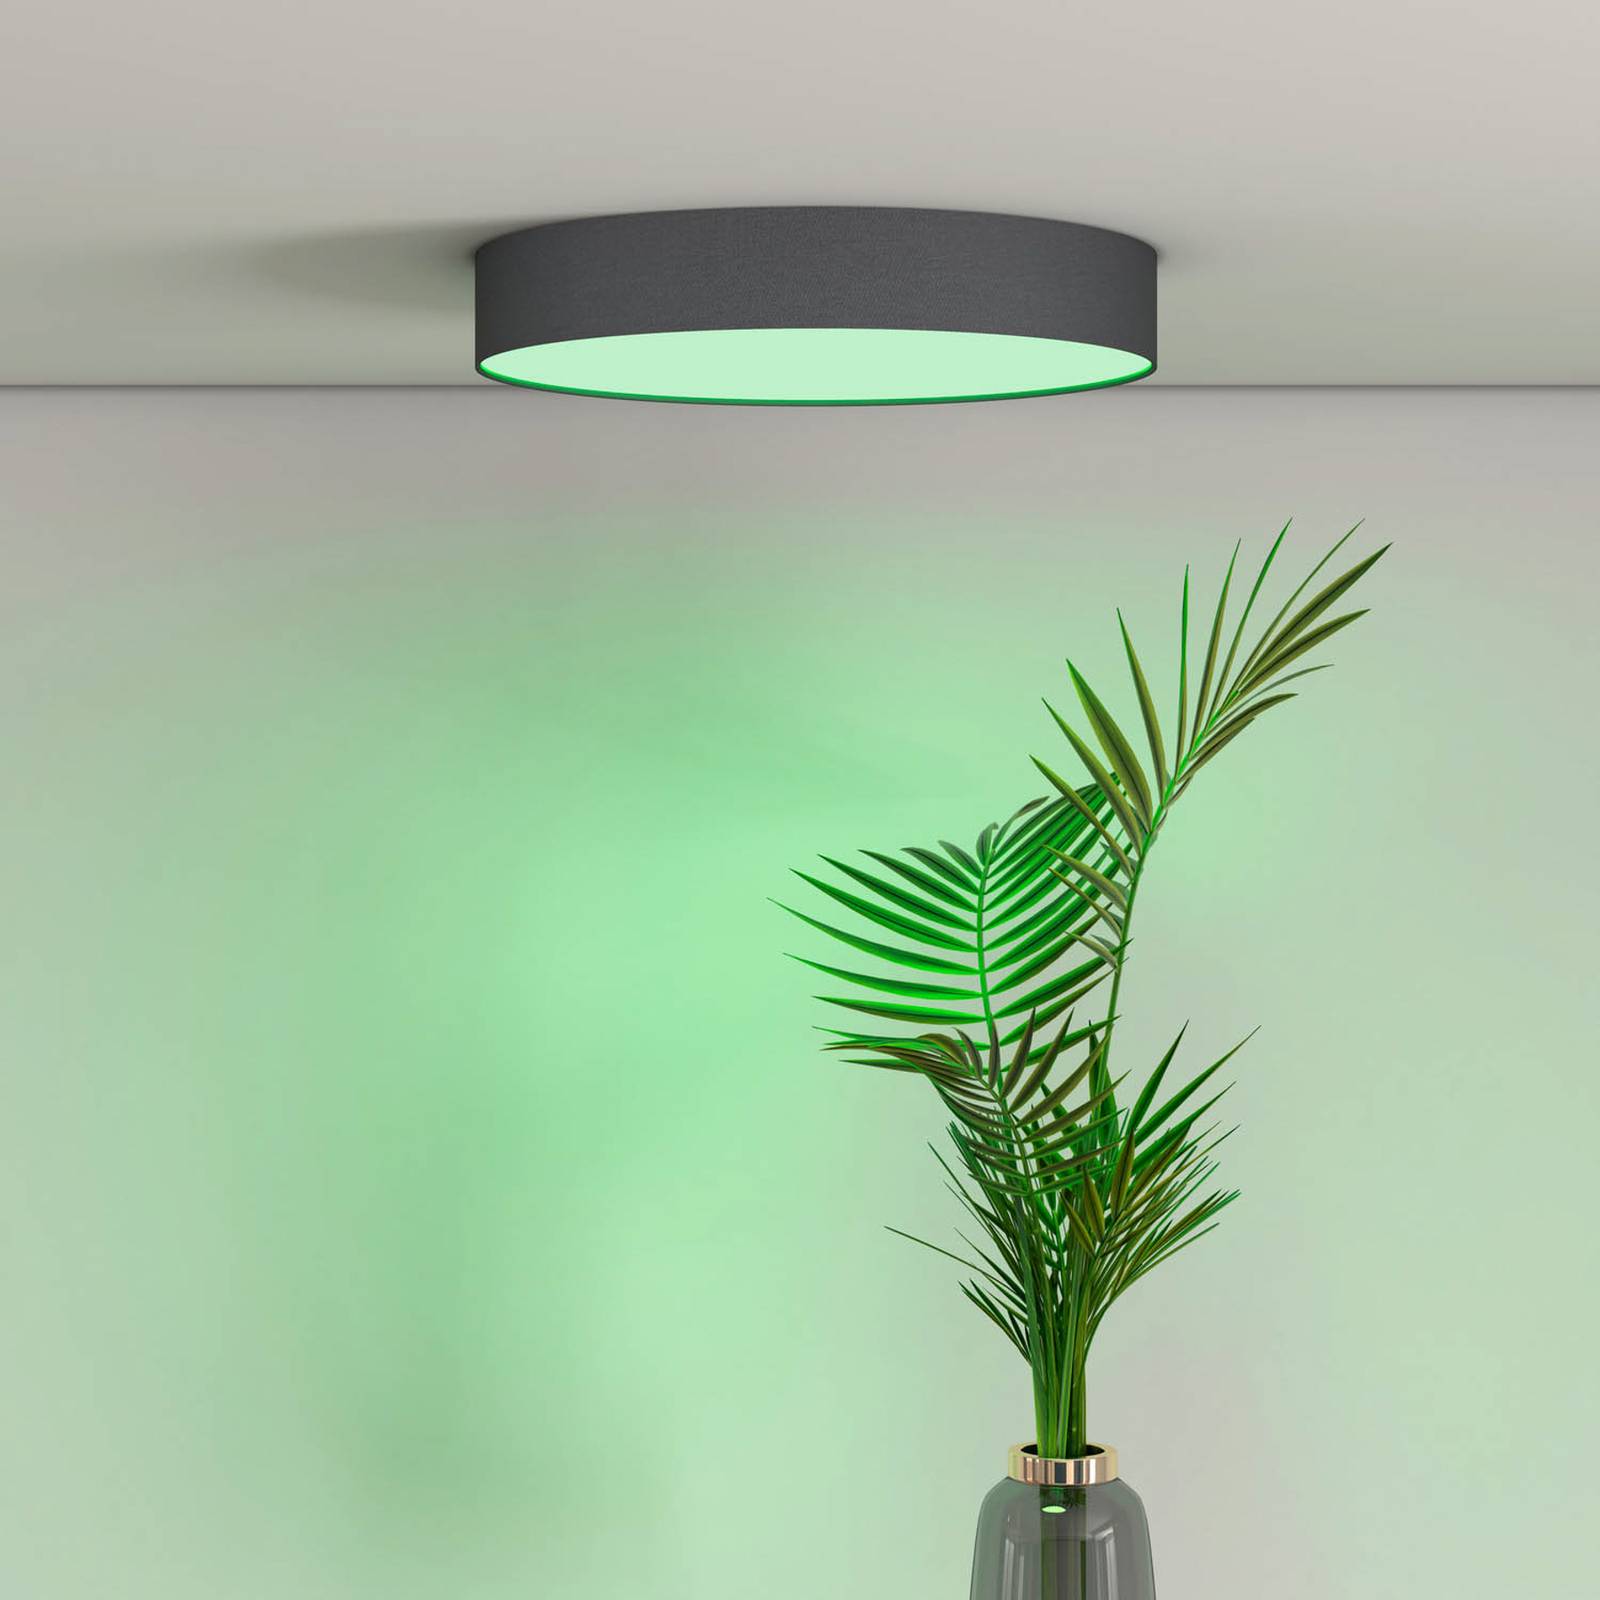 Calex Stropní svítidlo LED Calex Smart Fabric, 30 cm